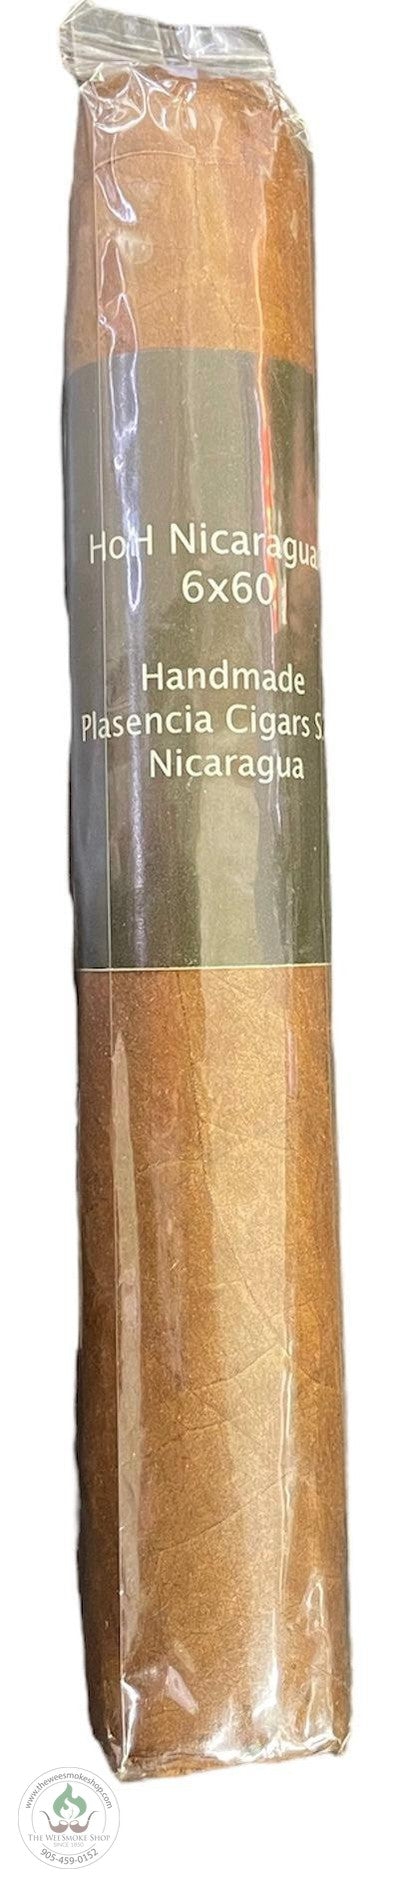 HoH - Nicaraguan 6x60 - The Wee Smoke Shop